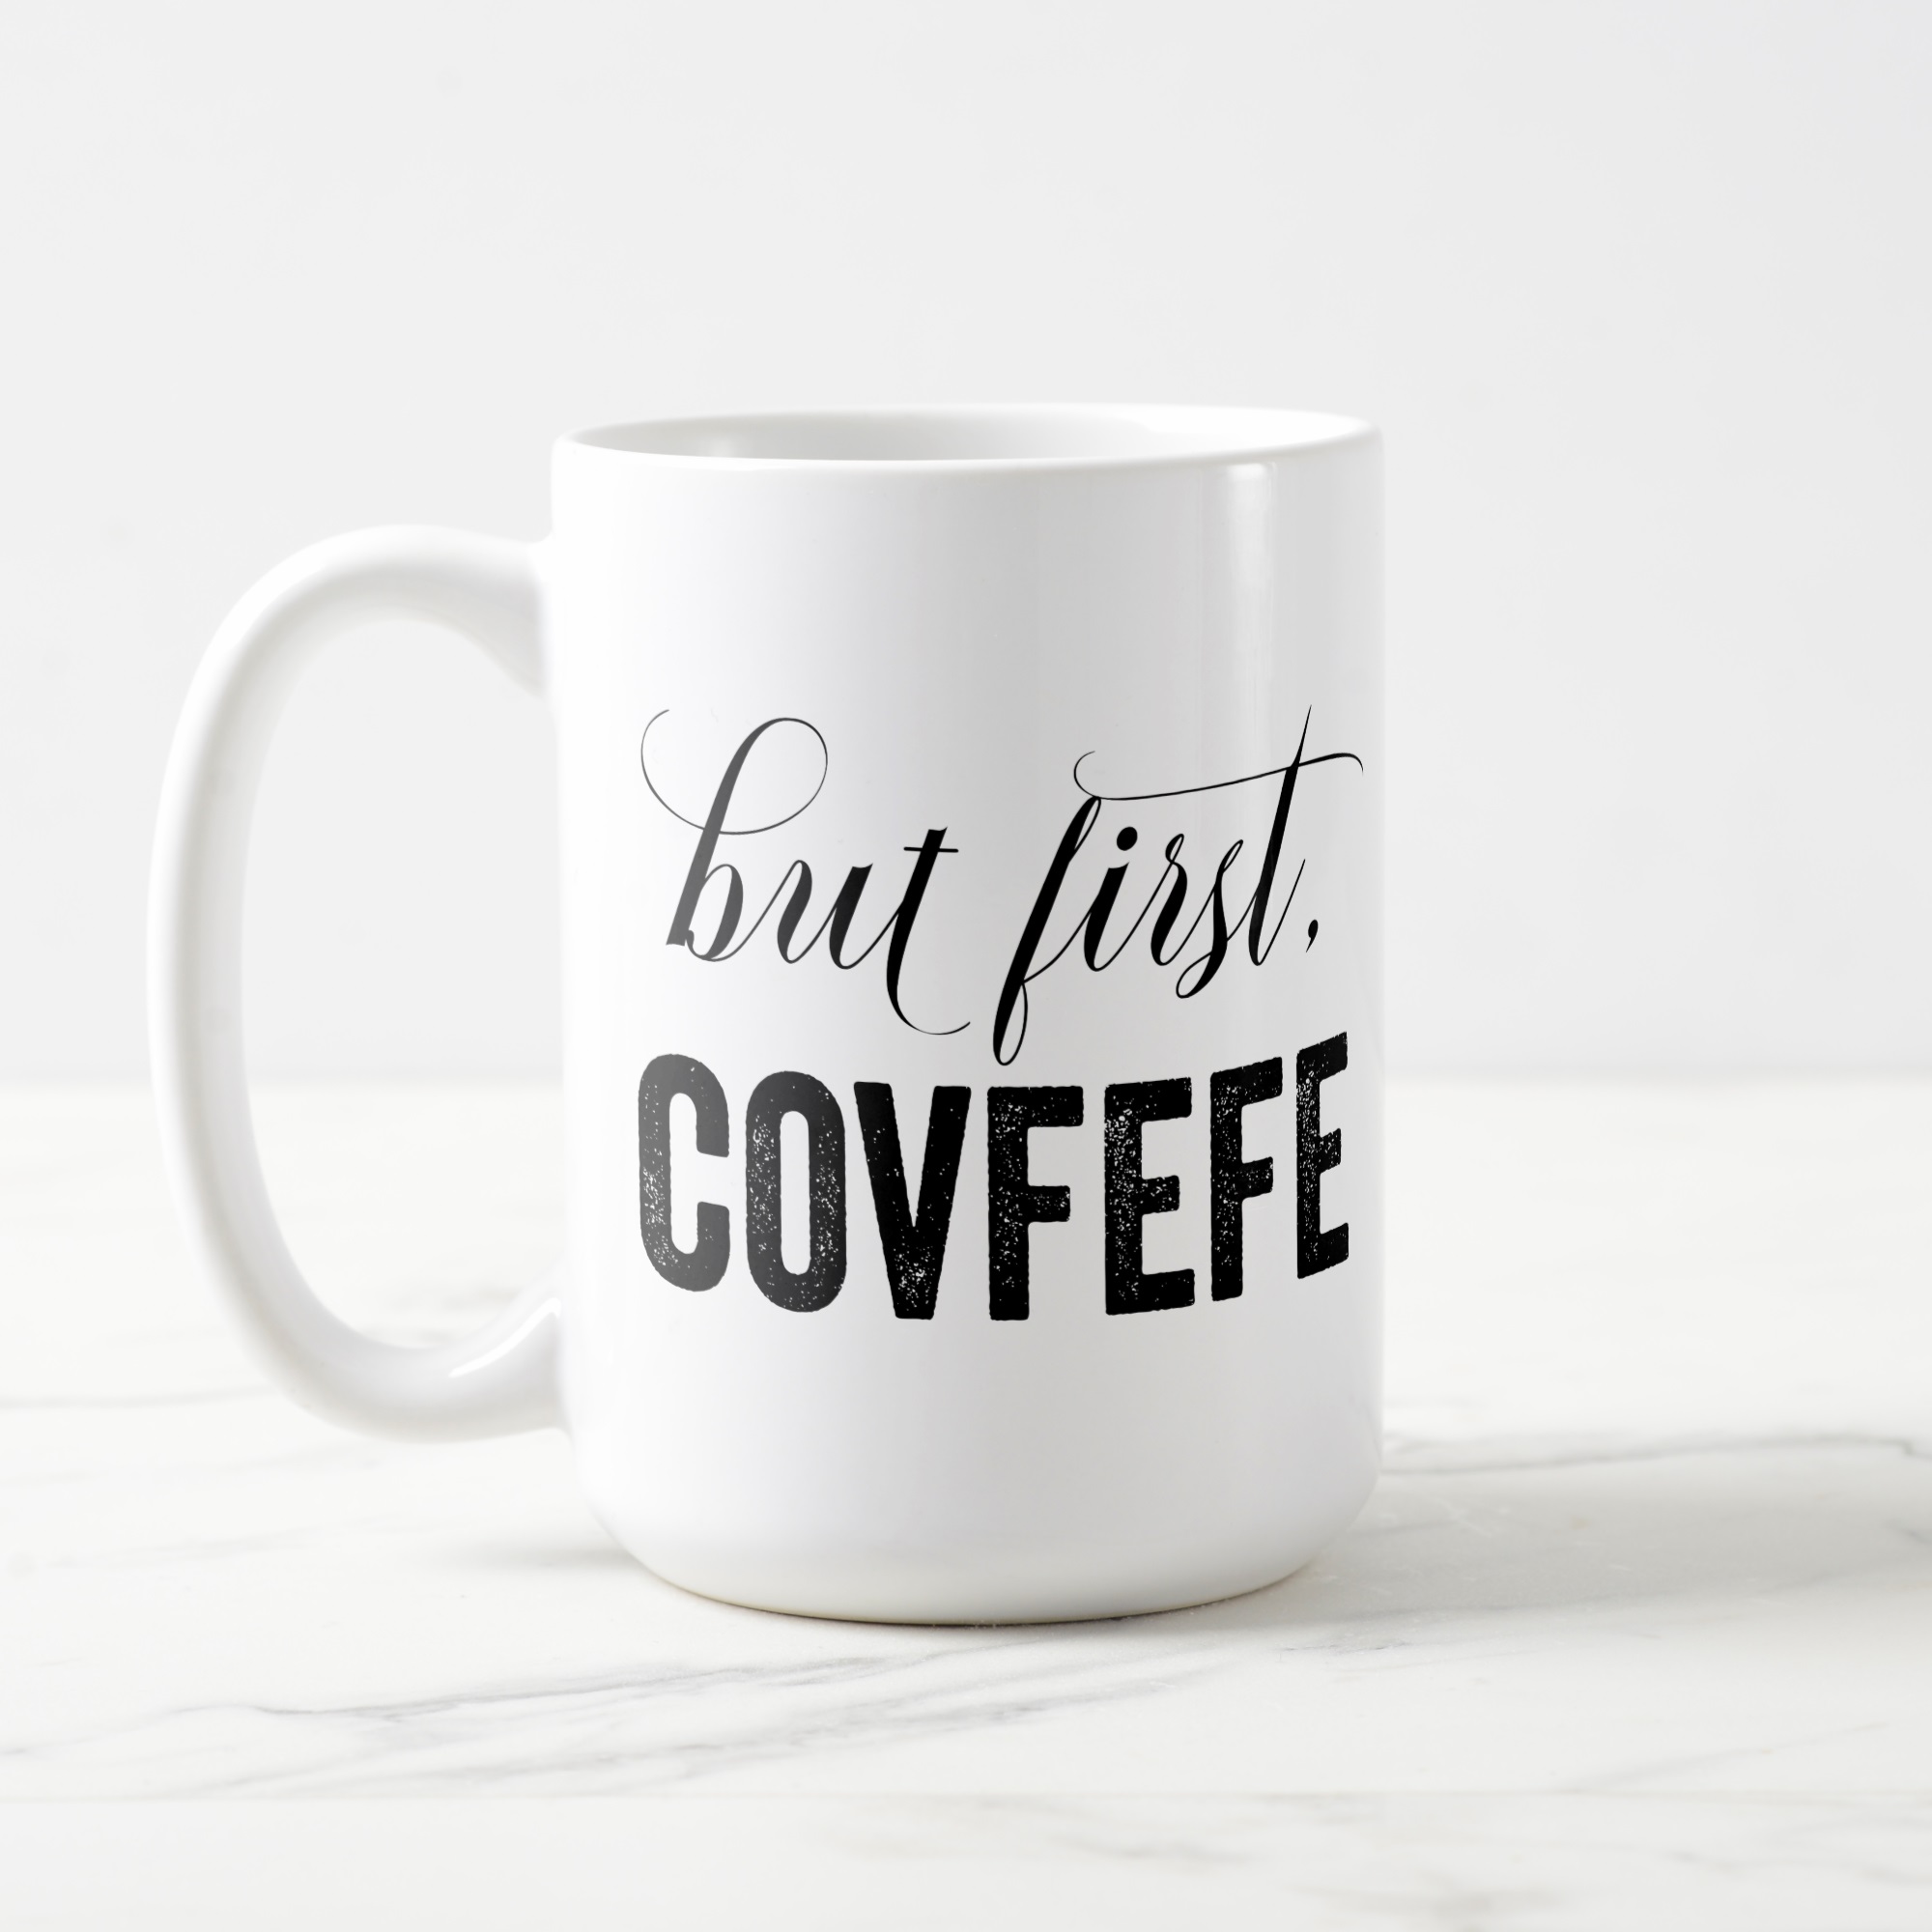 A Donald Trump novelty mug 